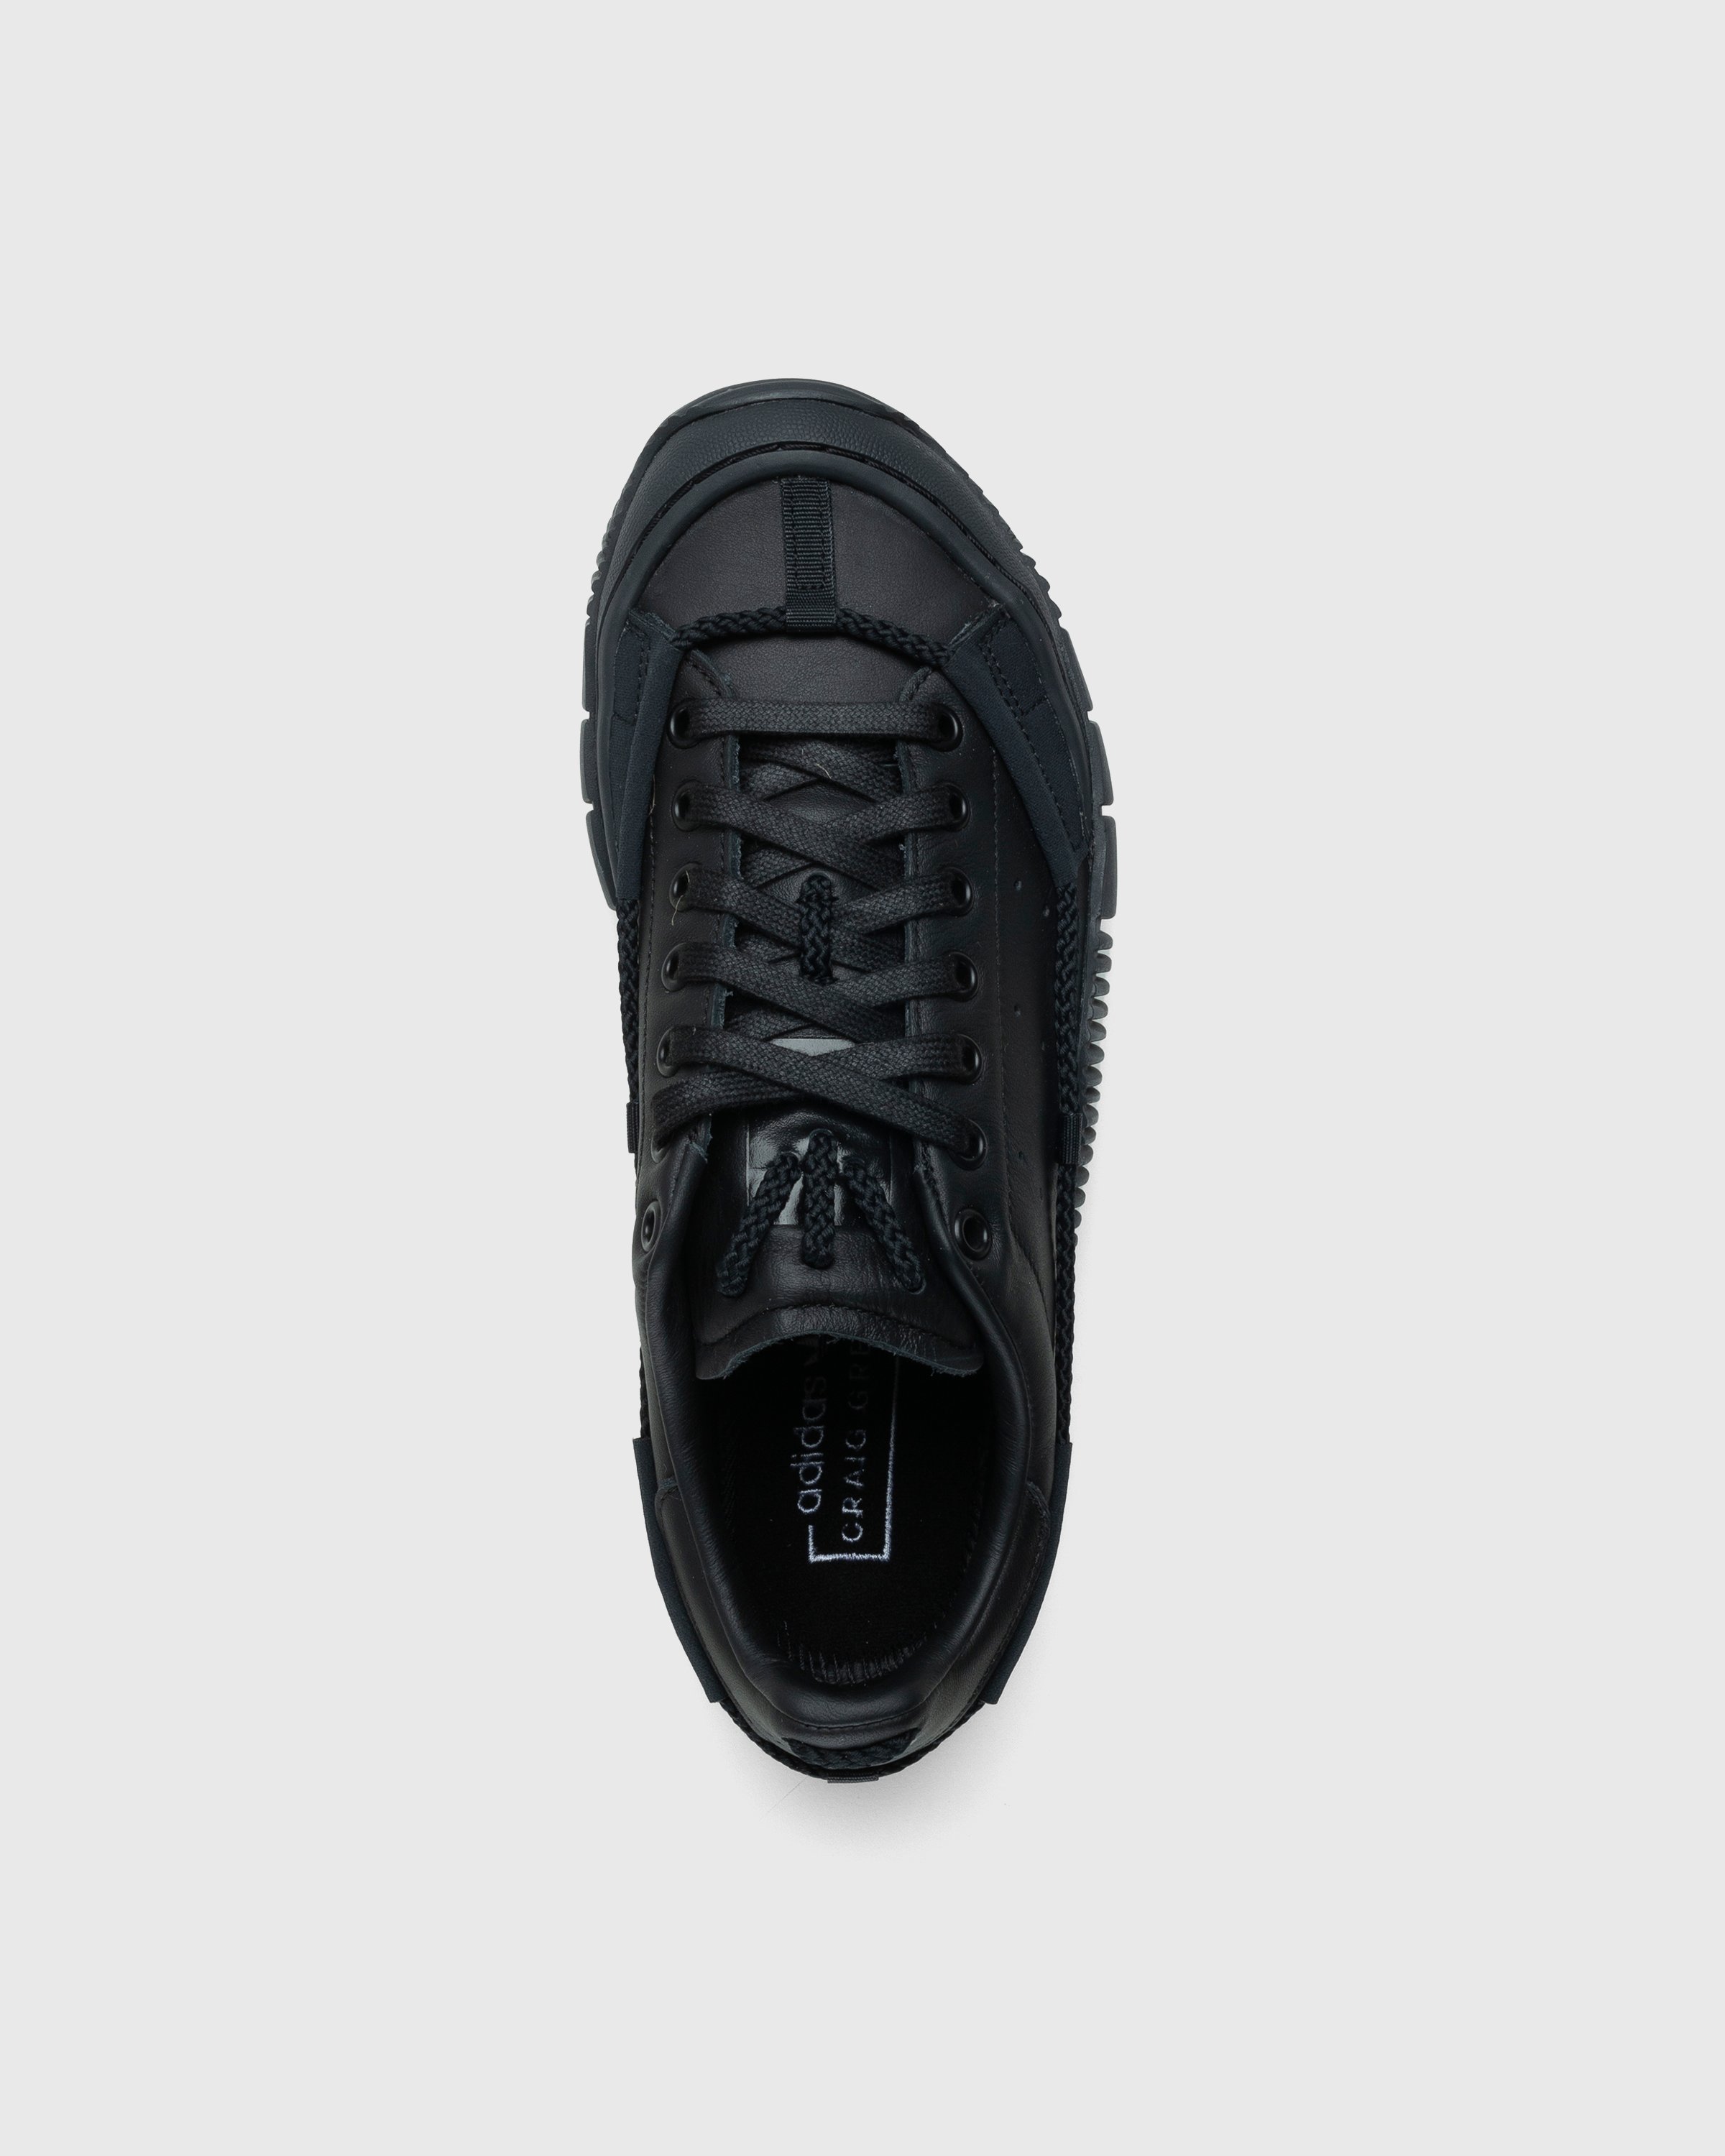 Adidas x Craig Green - Scuba Stan Black - Footwear - Black - Image 5